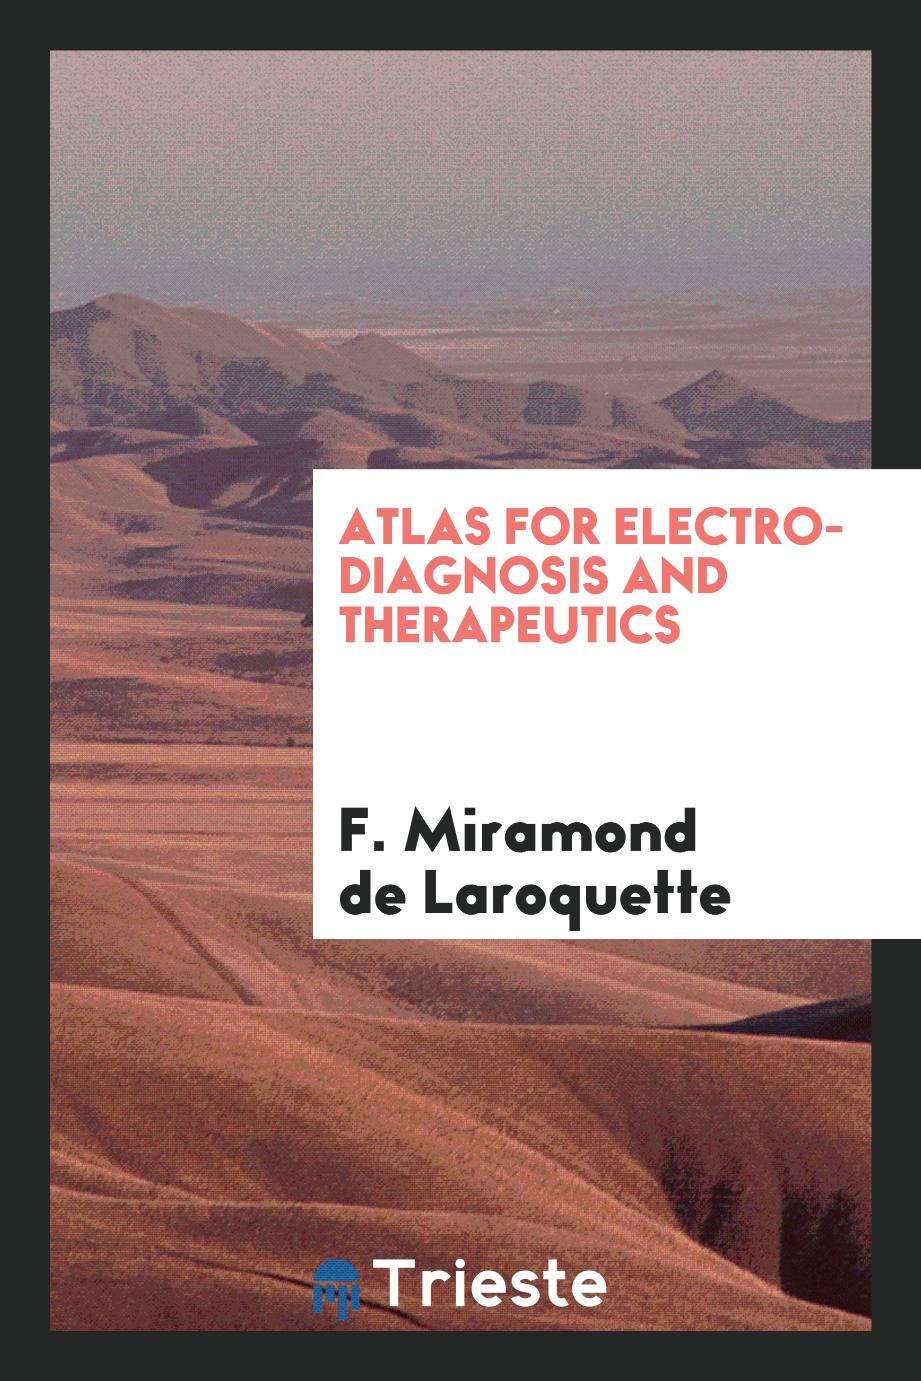 Atlas for electro-diagnosis and therapeutics